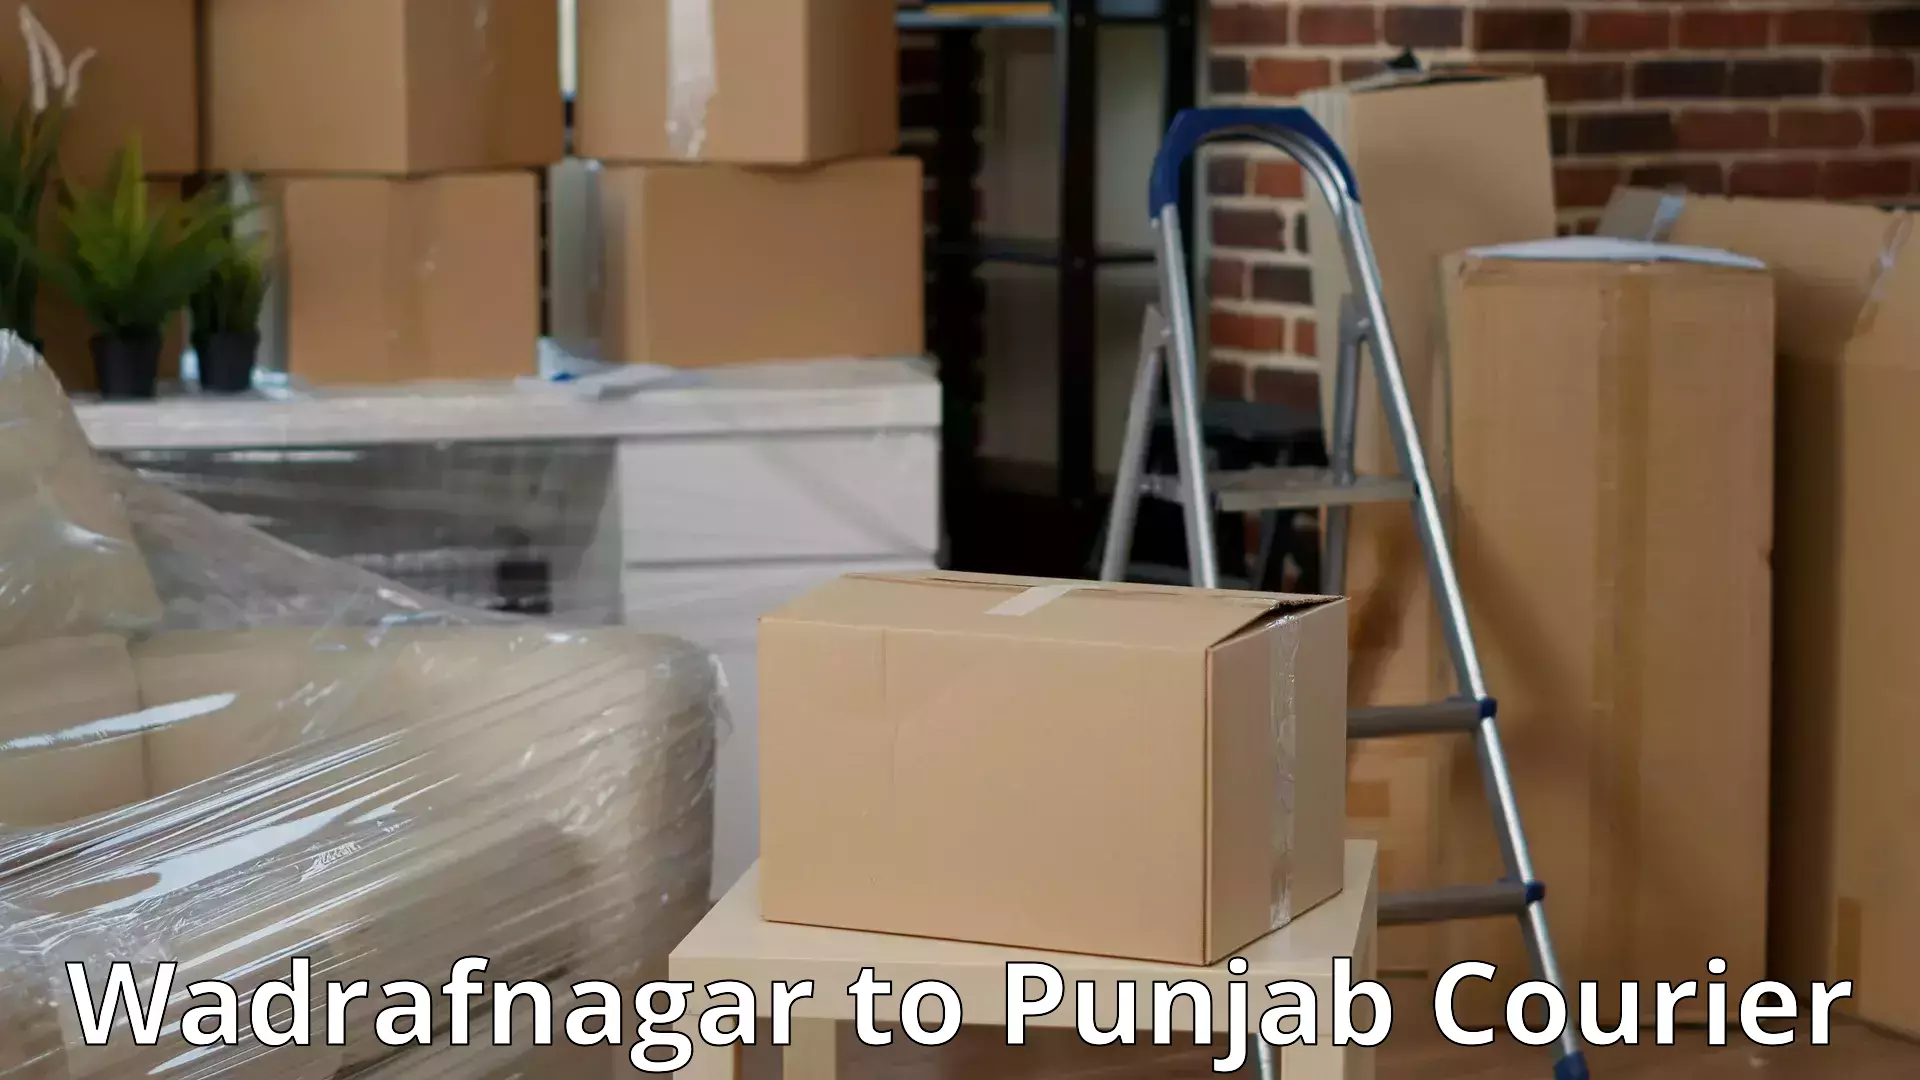 Furniture transport experts Wadrafnagar to Zirakpur